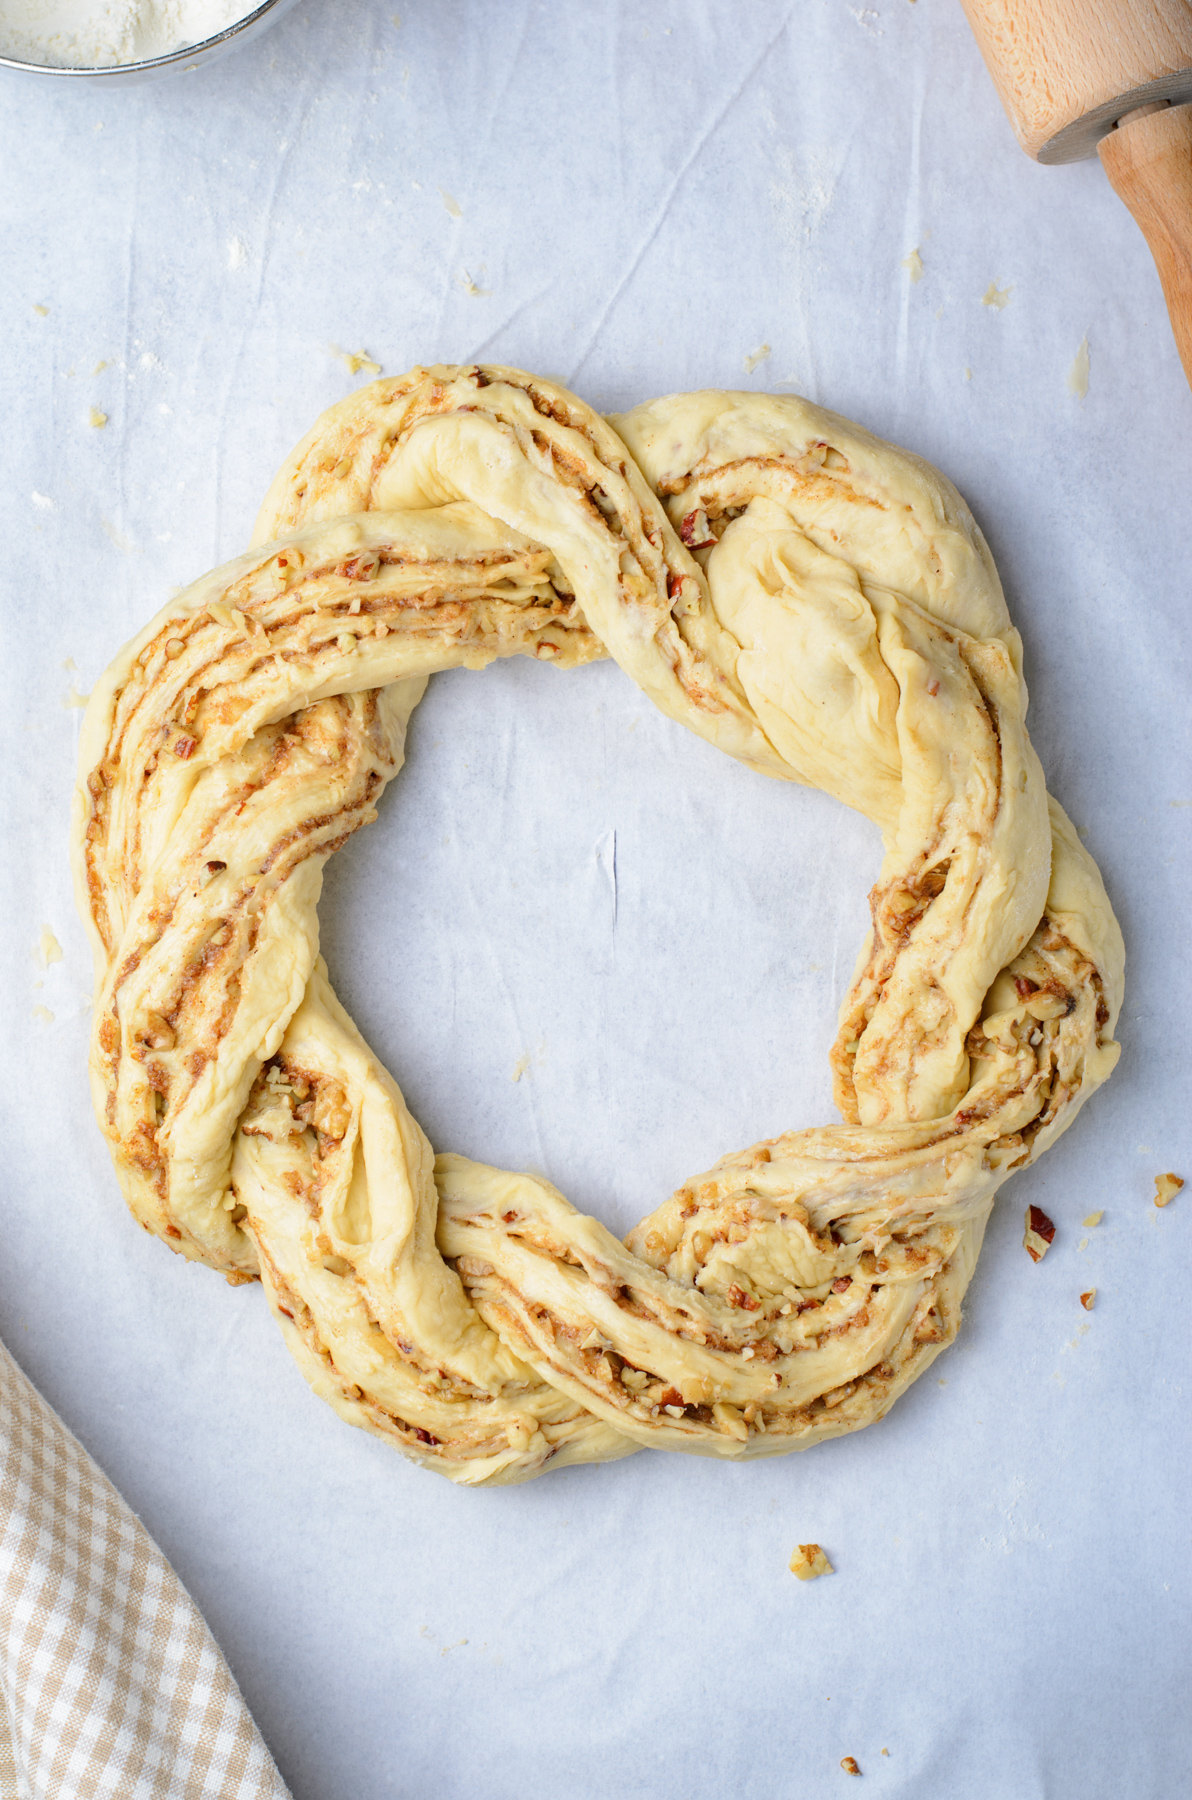 bread dough braided into a wreath shape